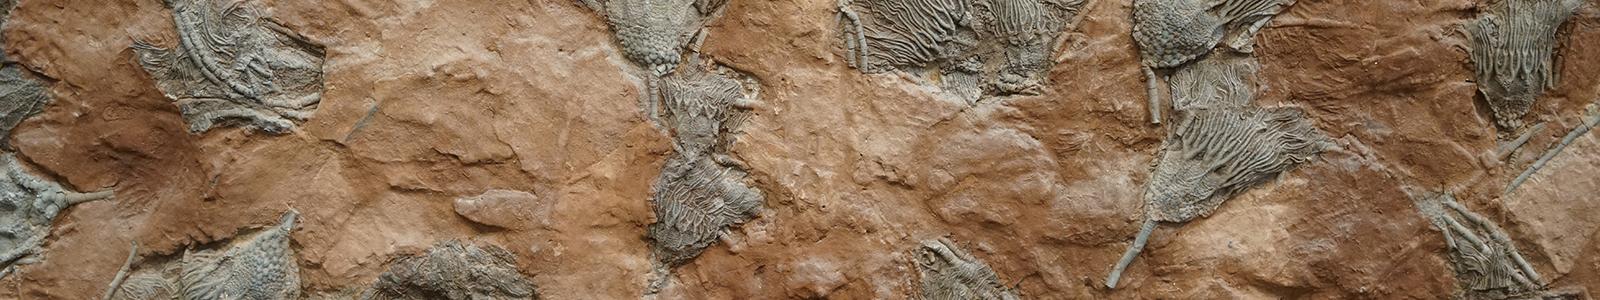 Fossil coleoid, Actinocamax plenus, found in Alton, Hampshire, from Upper Cretaceous